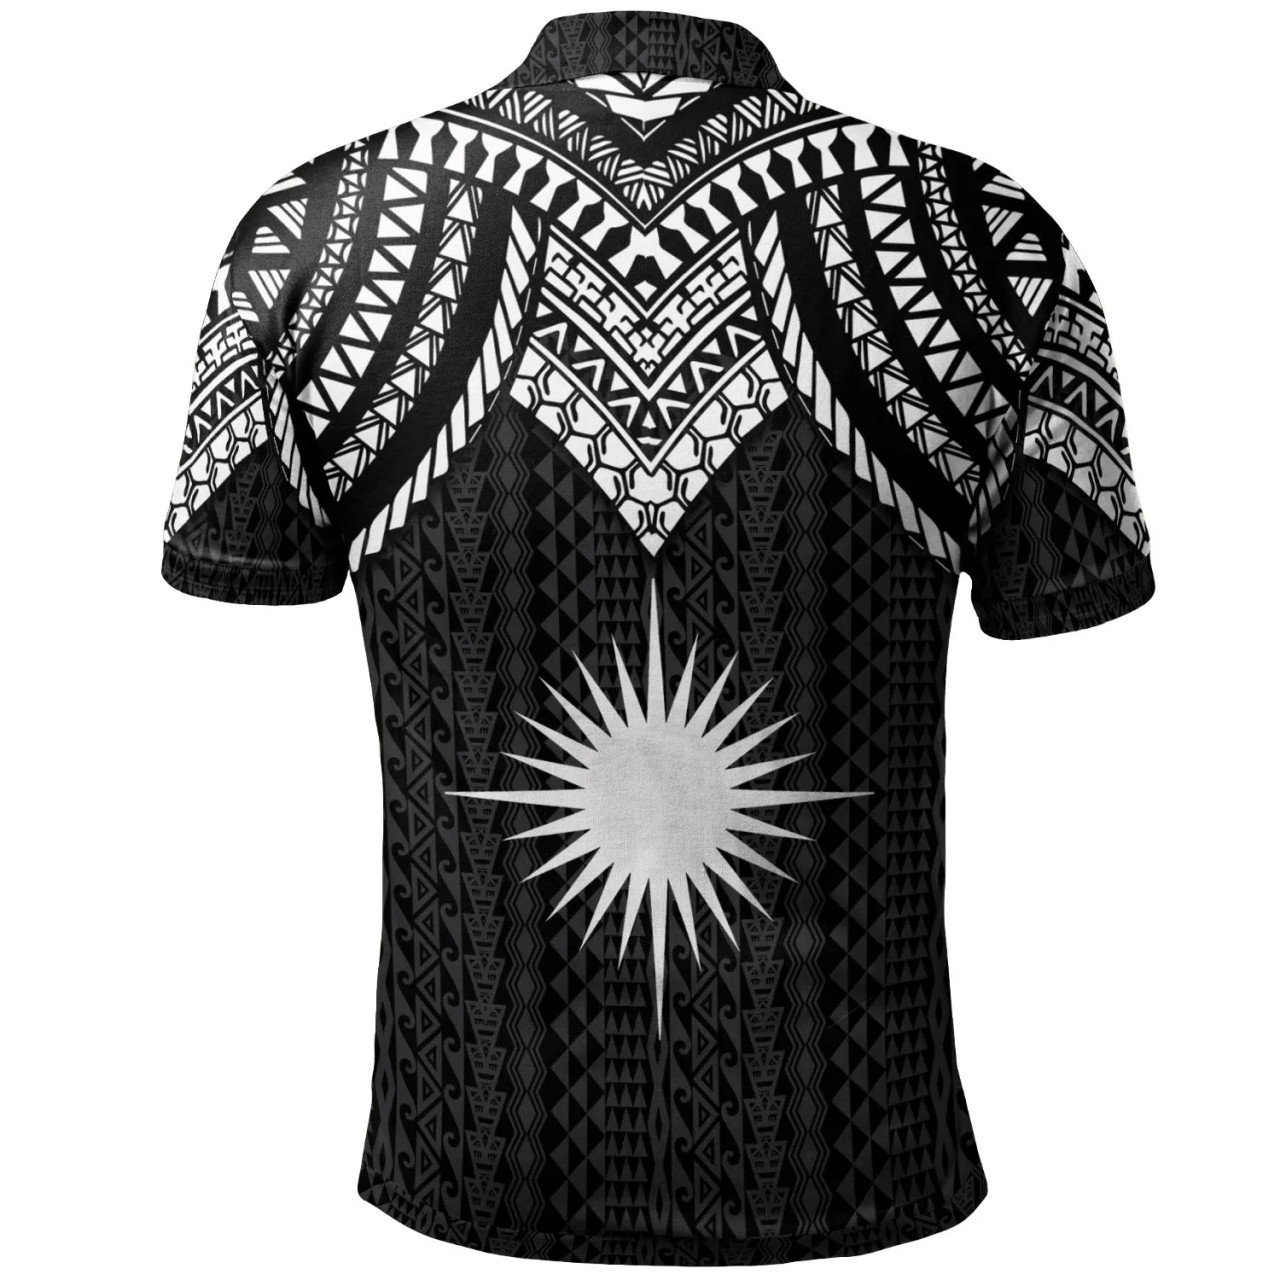 Marshall Islands Custom Personalised Polo Shirt - Polynesian Armor Style Black 2